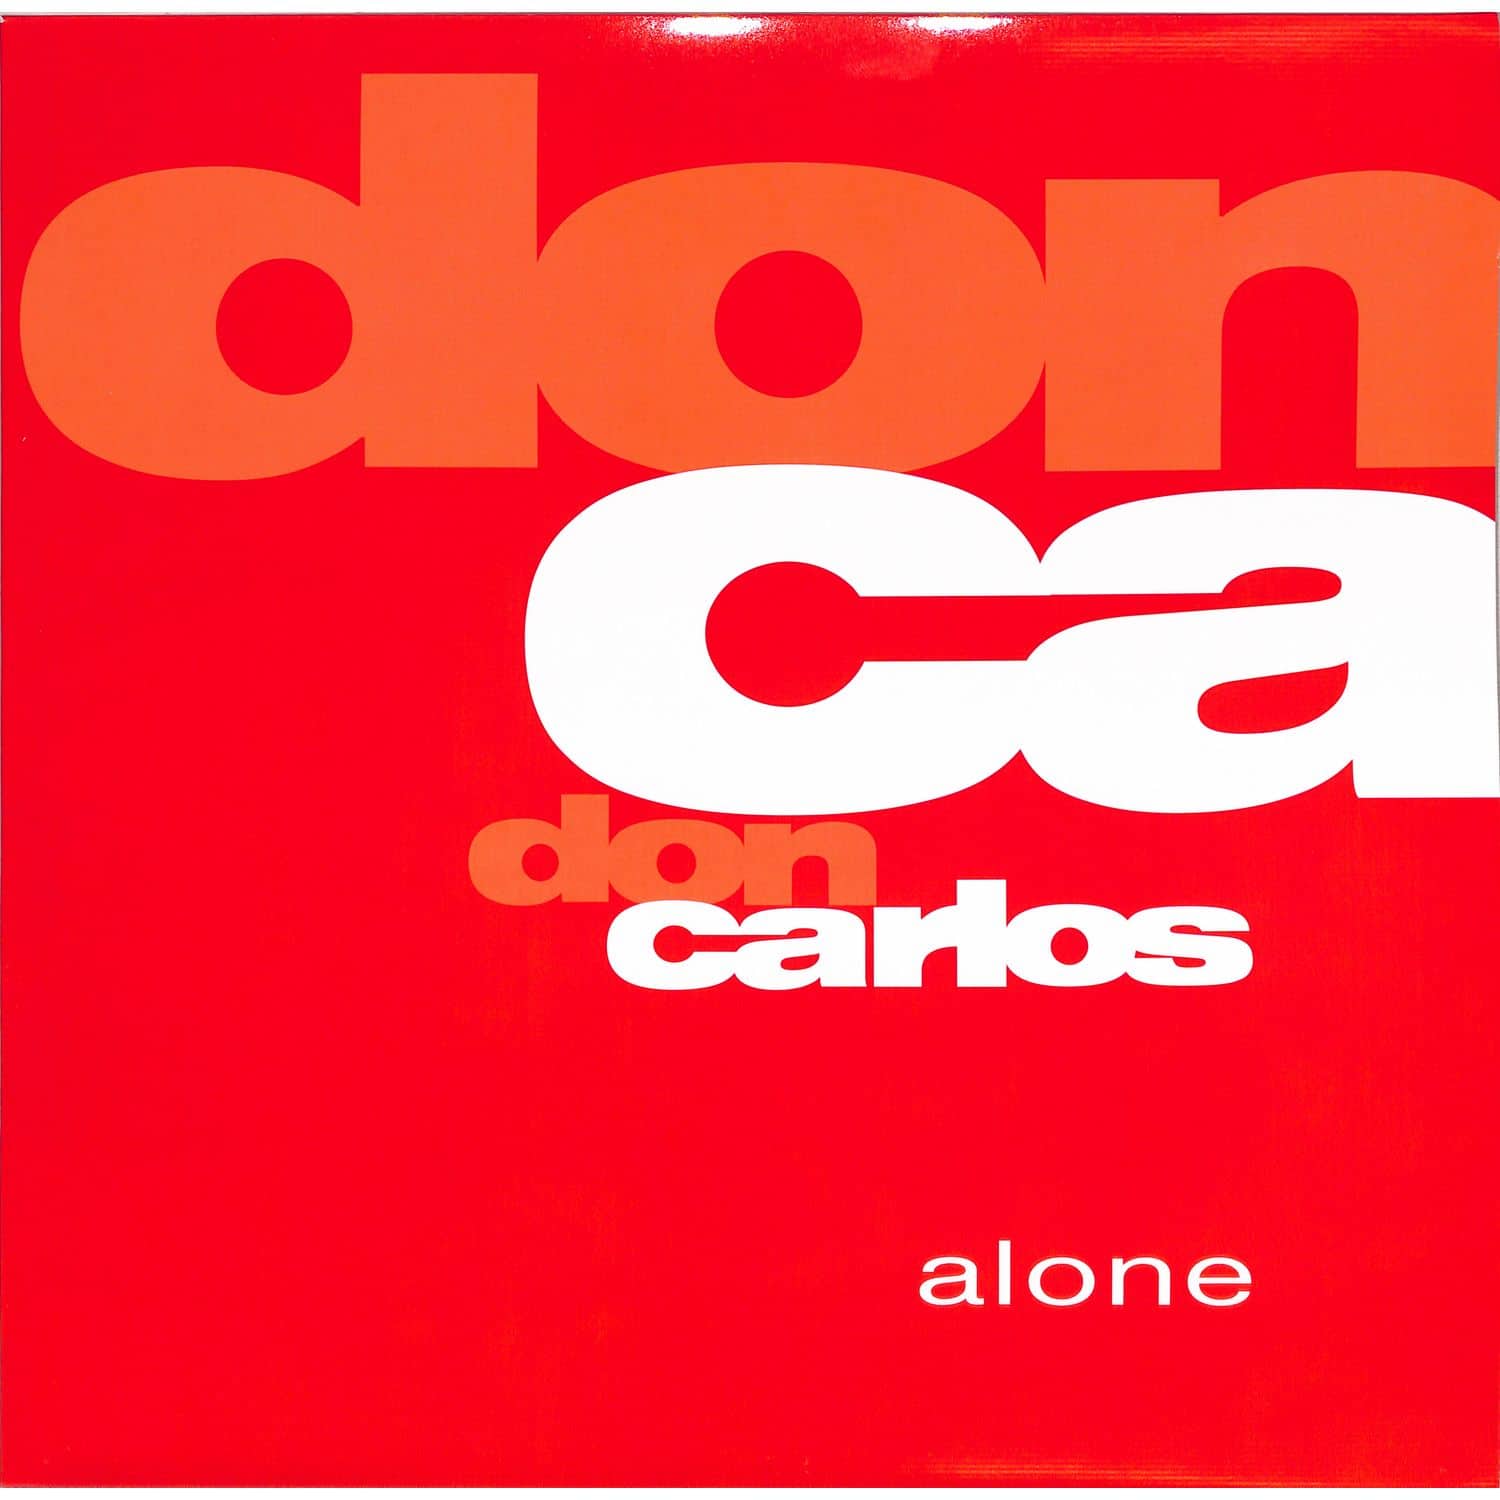 Don Carlos - ALONE